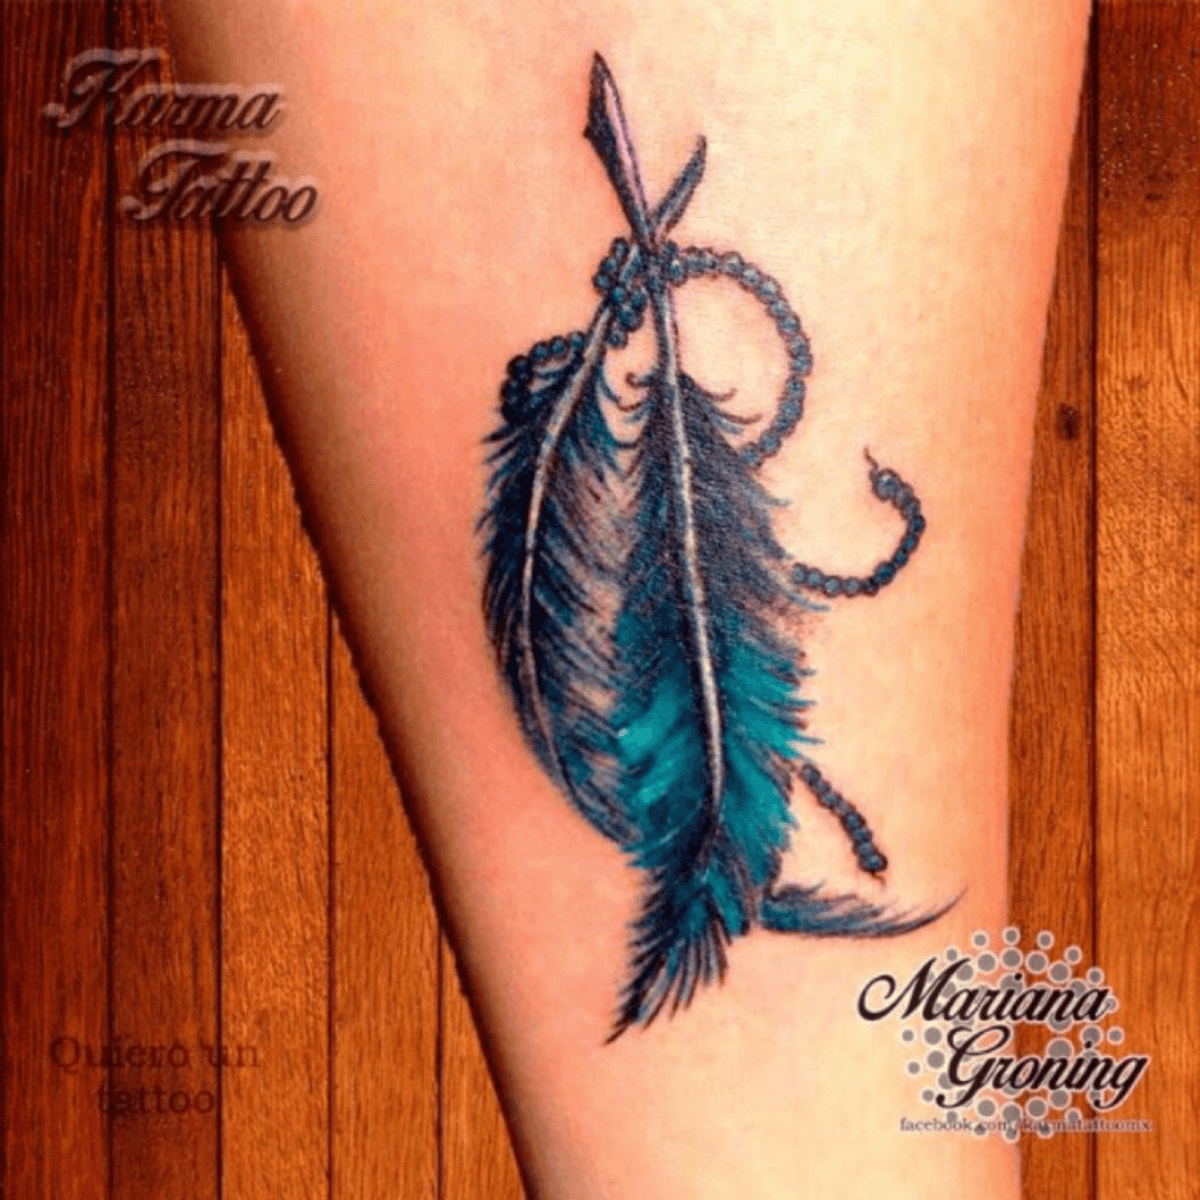 Tattoo uploaded by Mariana Groning • Feathers tattoo #tattoo # ...